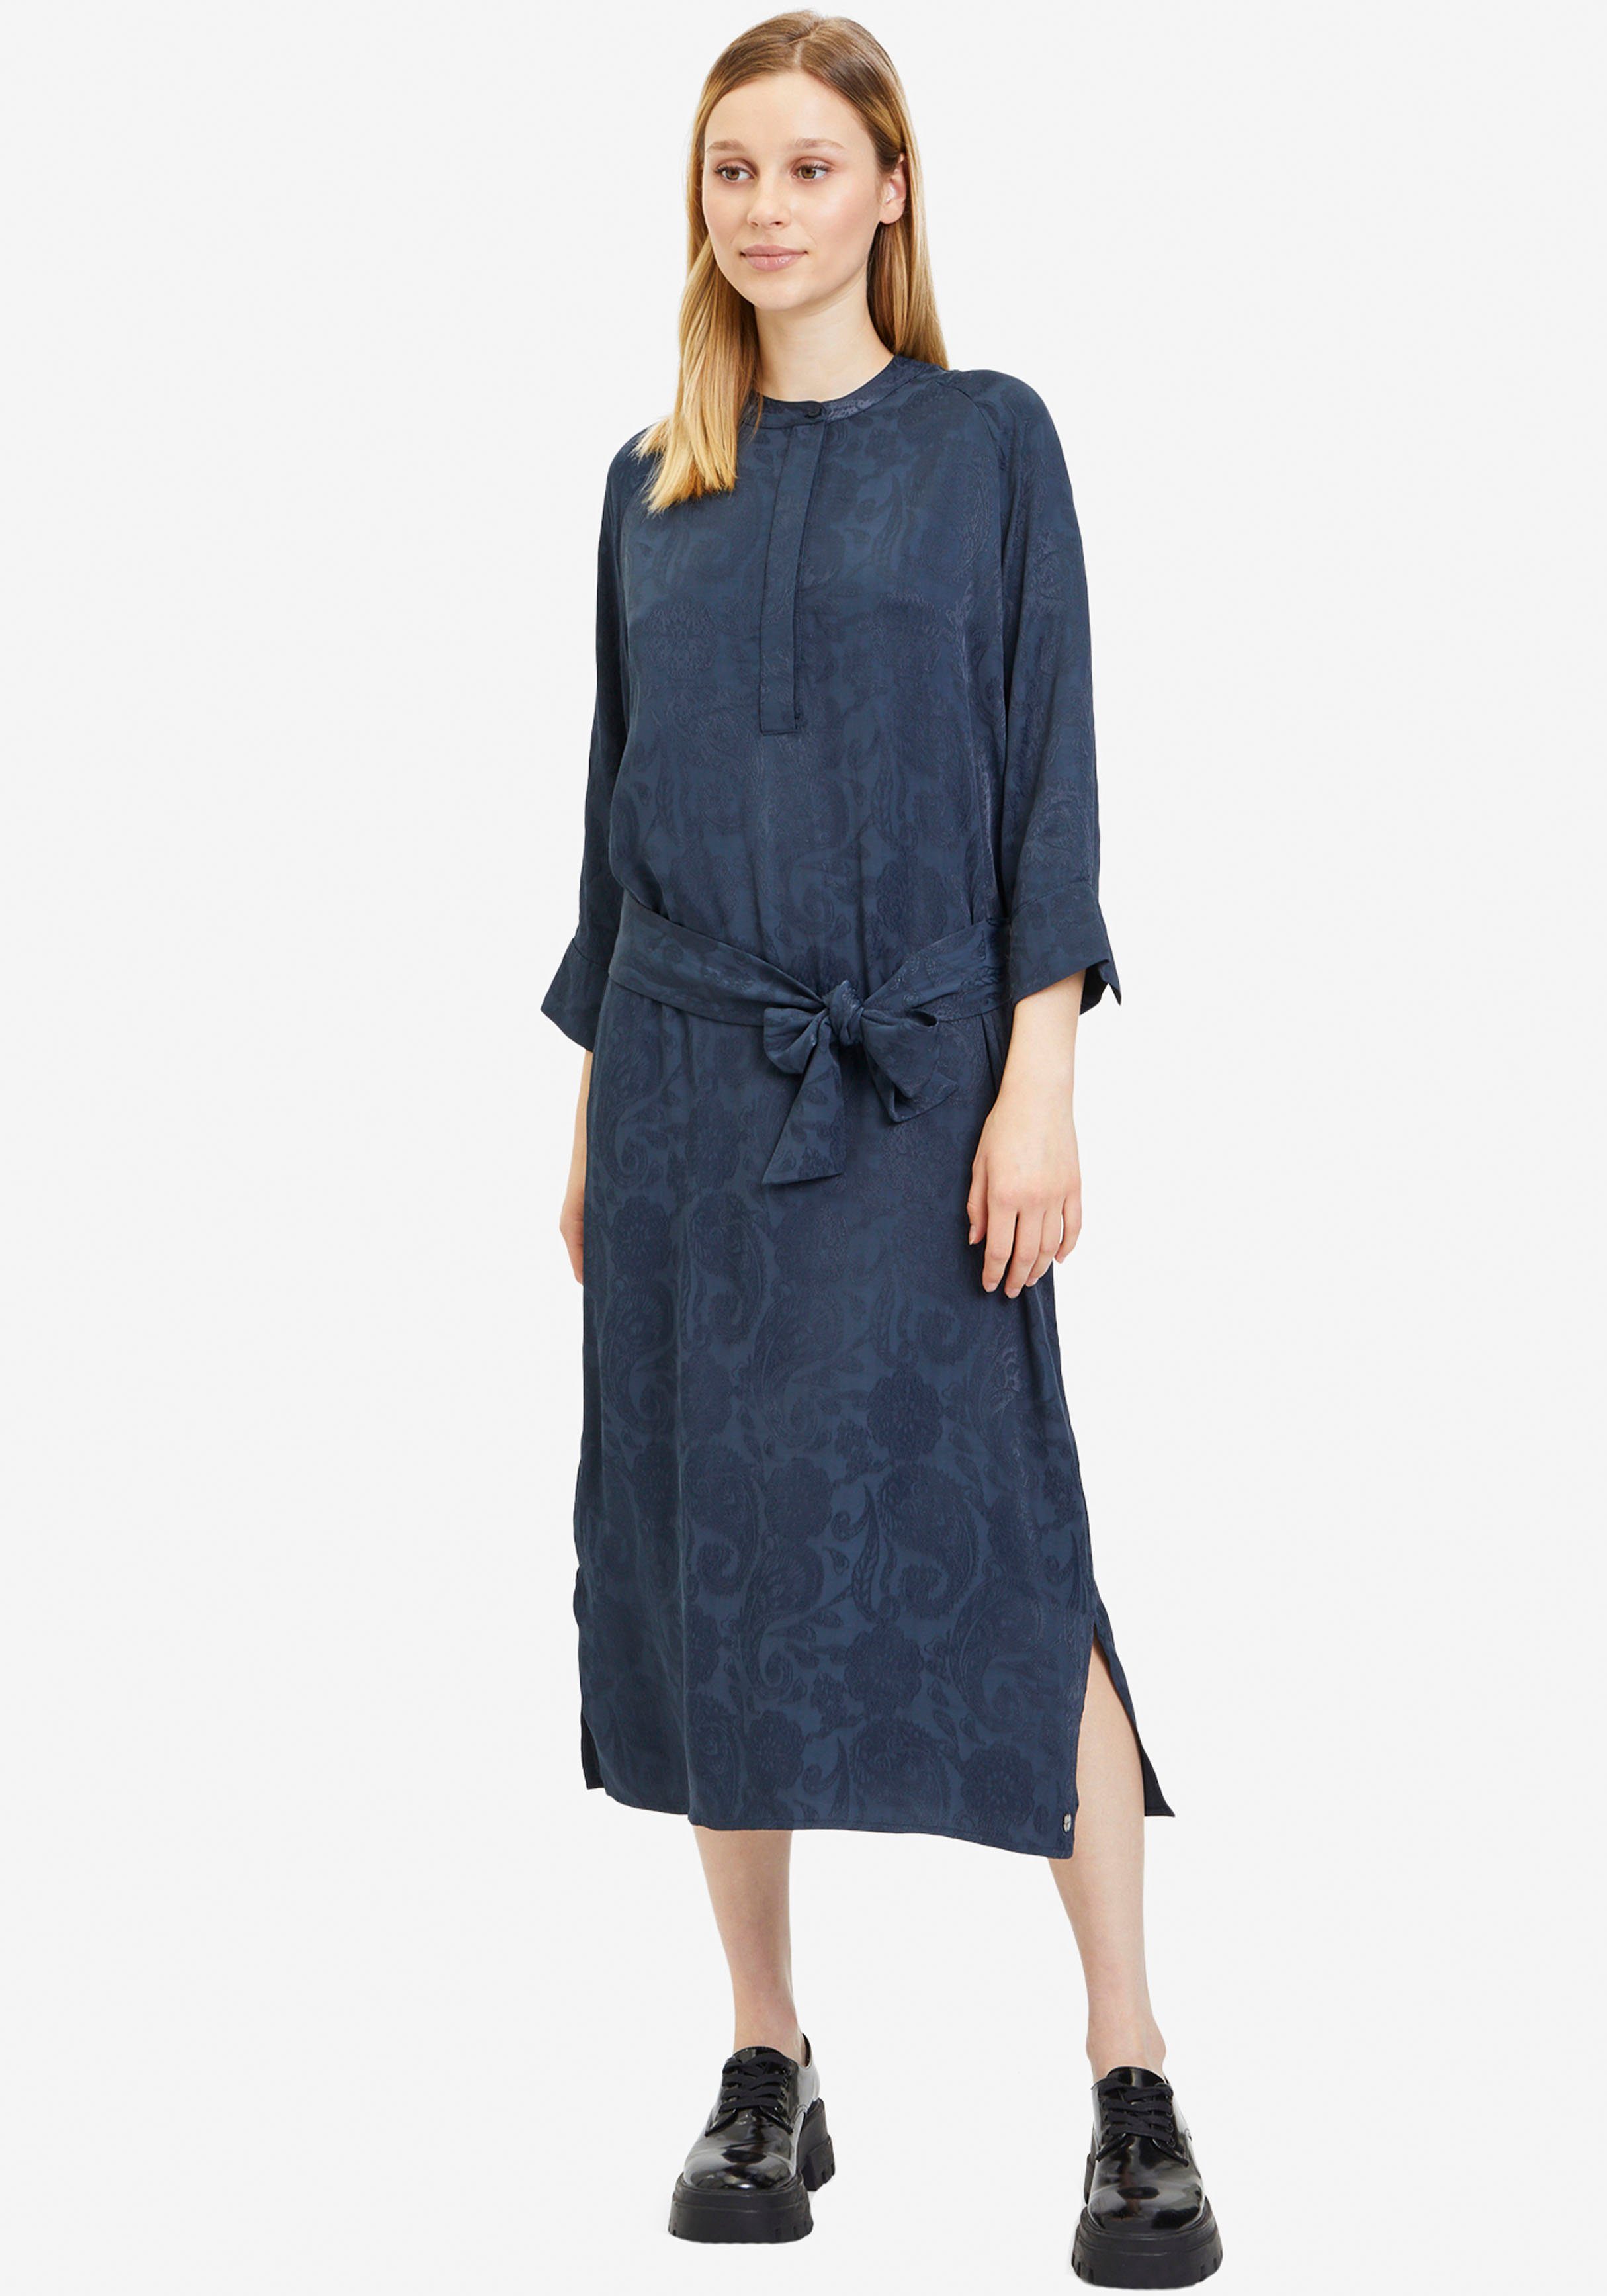 Tamaris Hemdblusenkleid mit glänzenden Paisley-Muster - NEUE KOLLEKTION | Sommerkleider